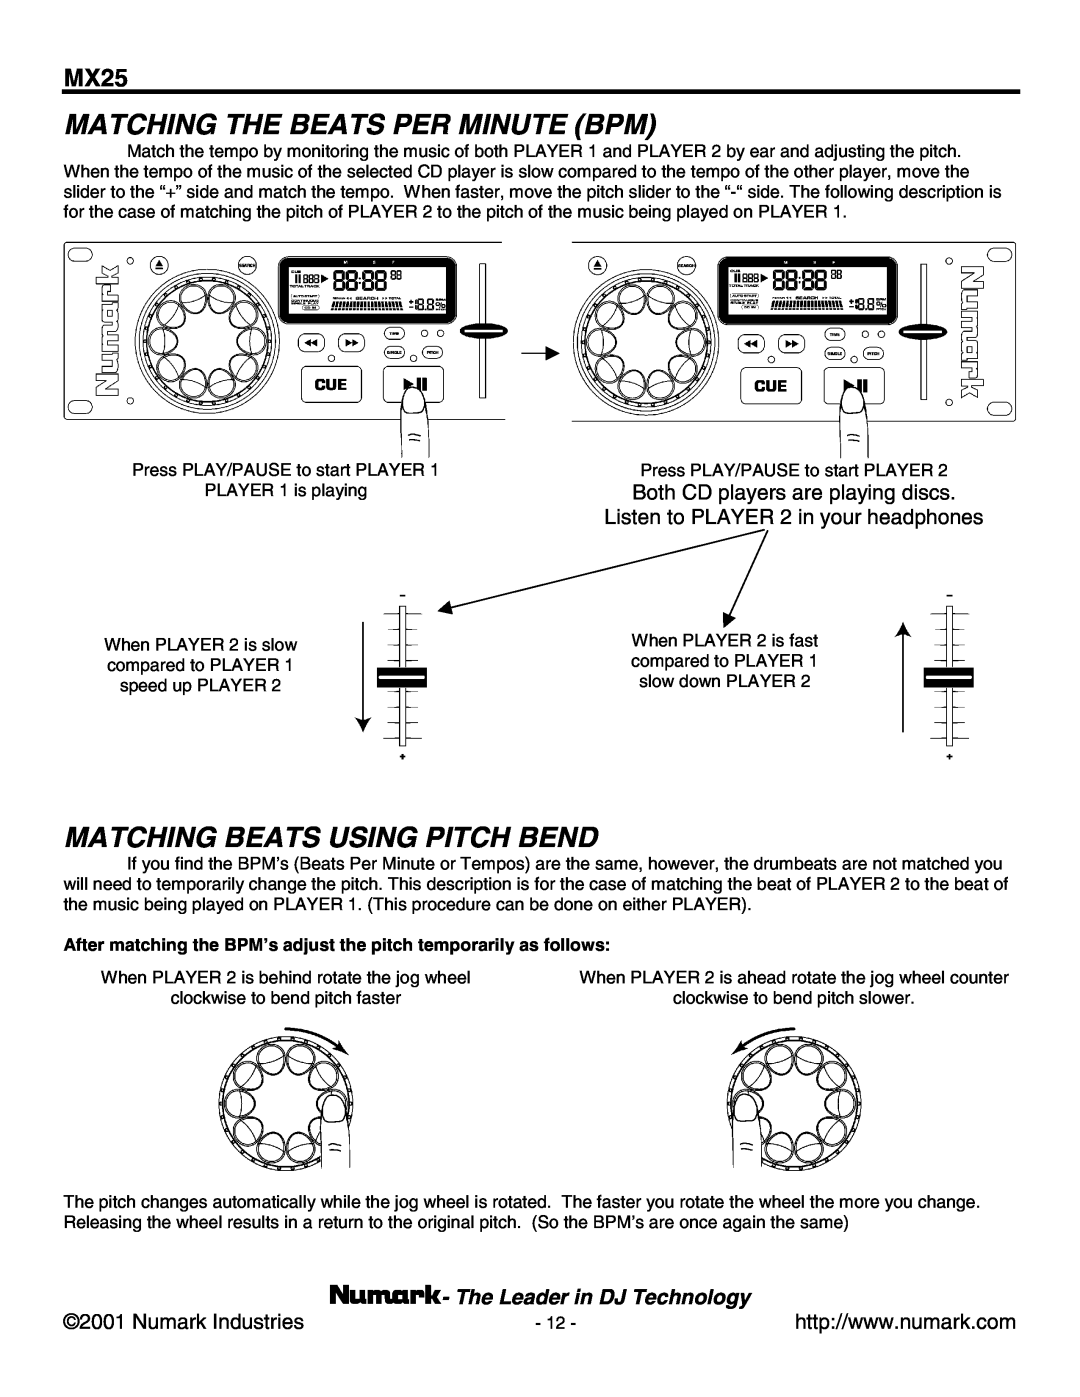 Numark Industries MX25 manual Matching The Beats Per Minute Bpm, Matching Beats Using Pitch Bend, Numark Industries 